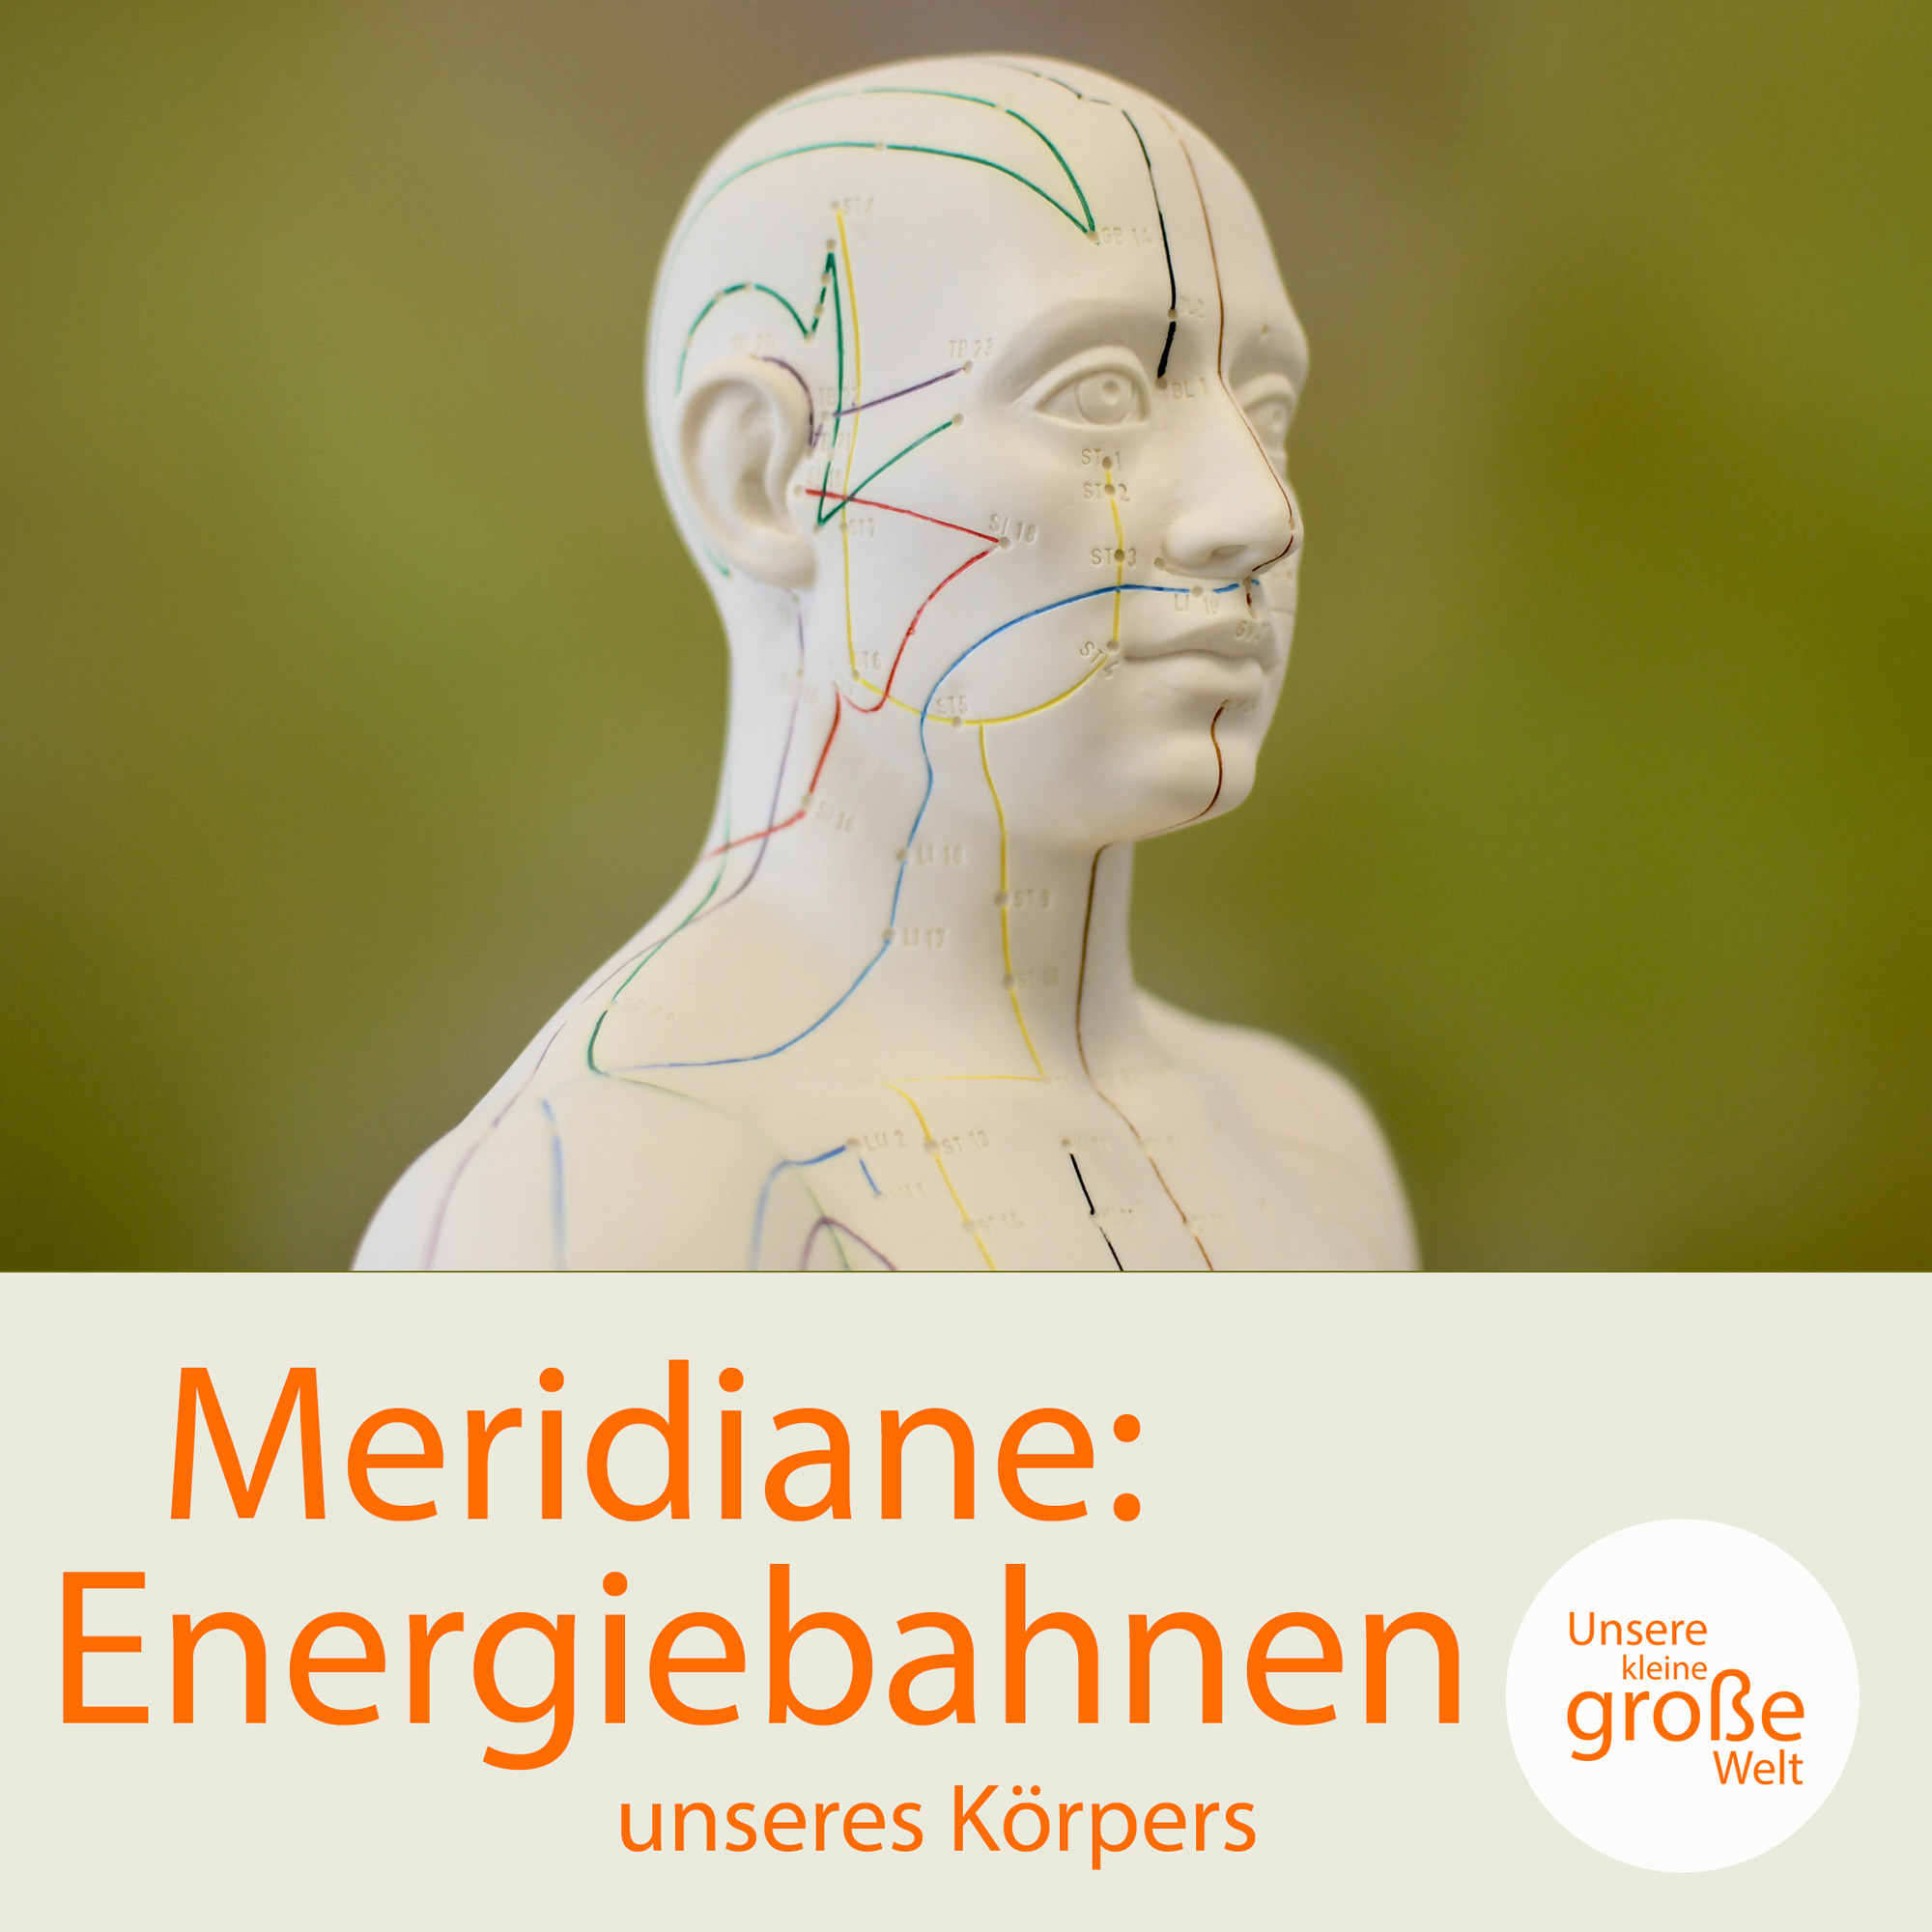 Unsere kleine, große Welt Folge 69: Meridiane: Energiebahnen unseres Körpers